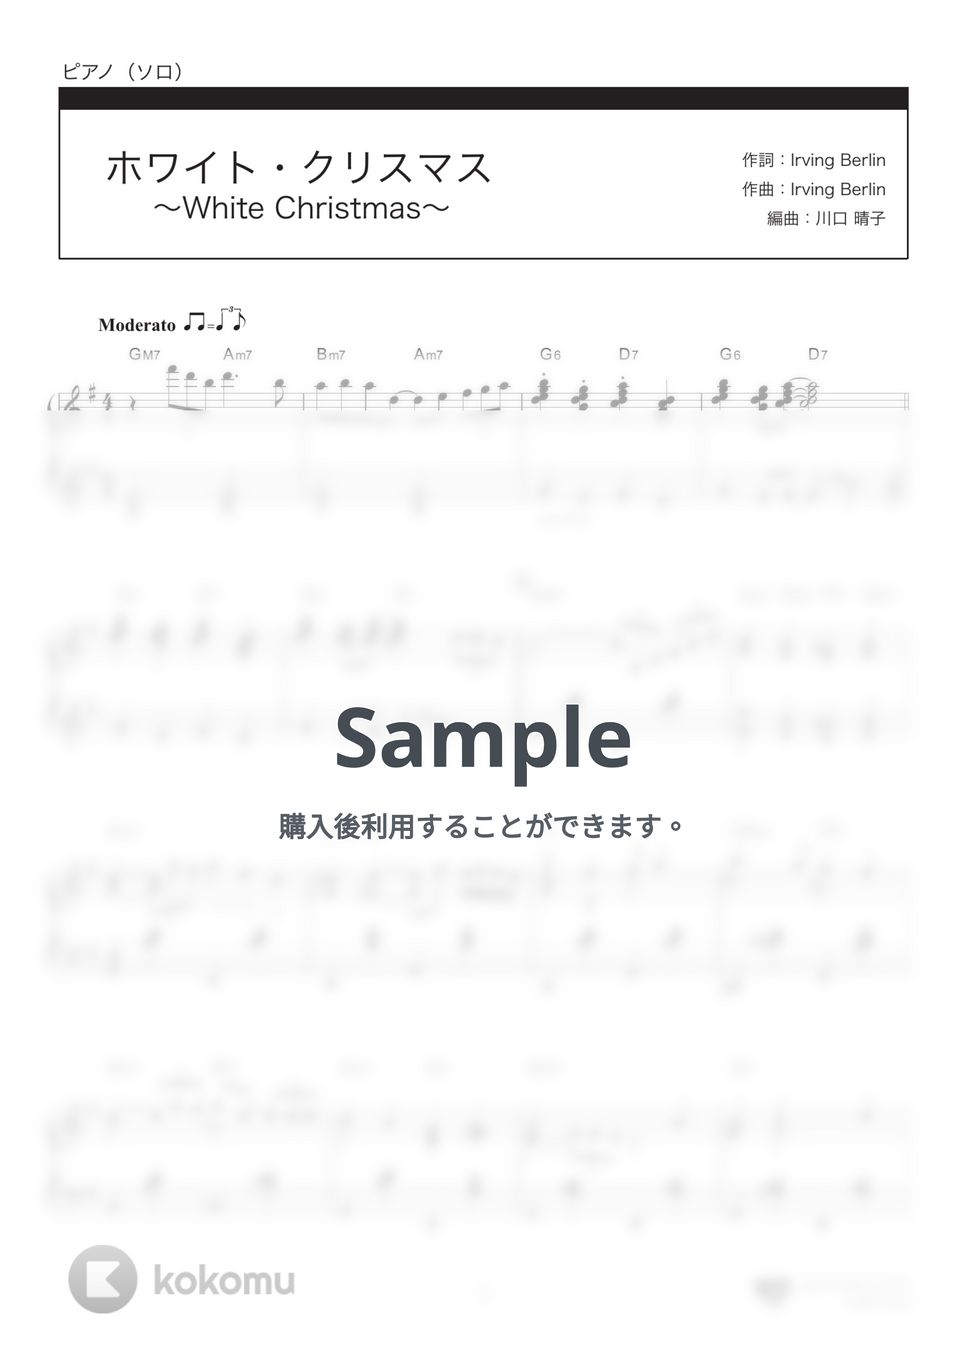 Irving Berlin - ホワイト・クリスマス〜White Christmas〜 (アドリブ付き) by 楽譜仕事人_川口晴子